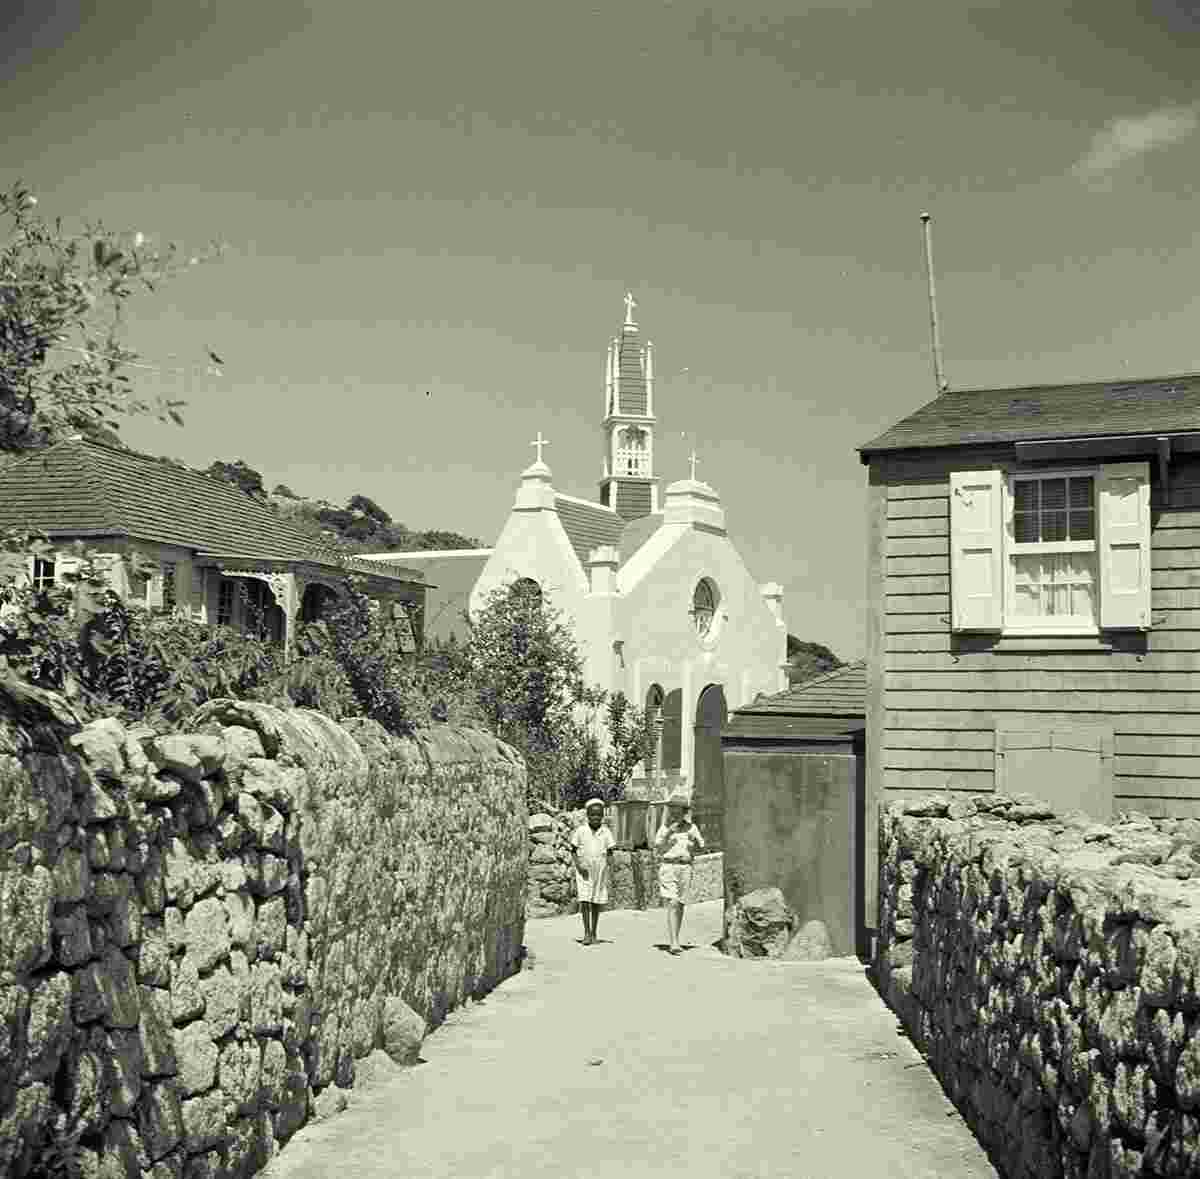 Windwardside. Street with Roman Catholic Church, 1947